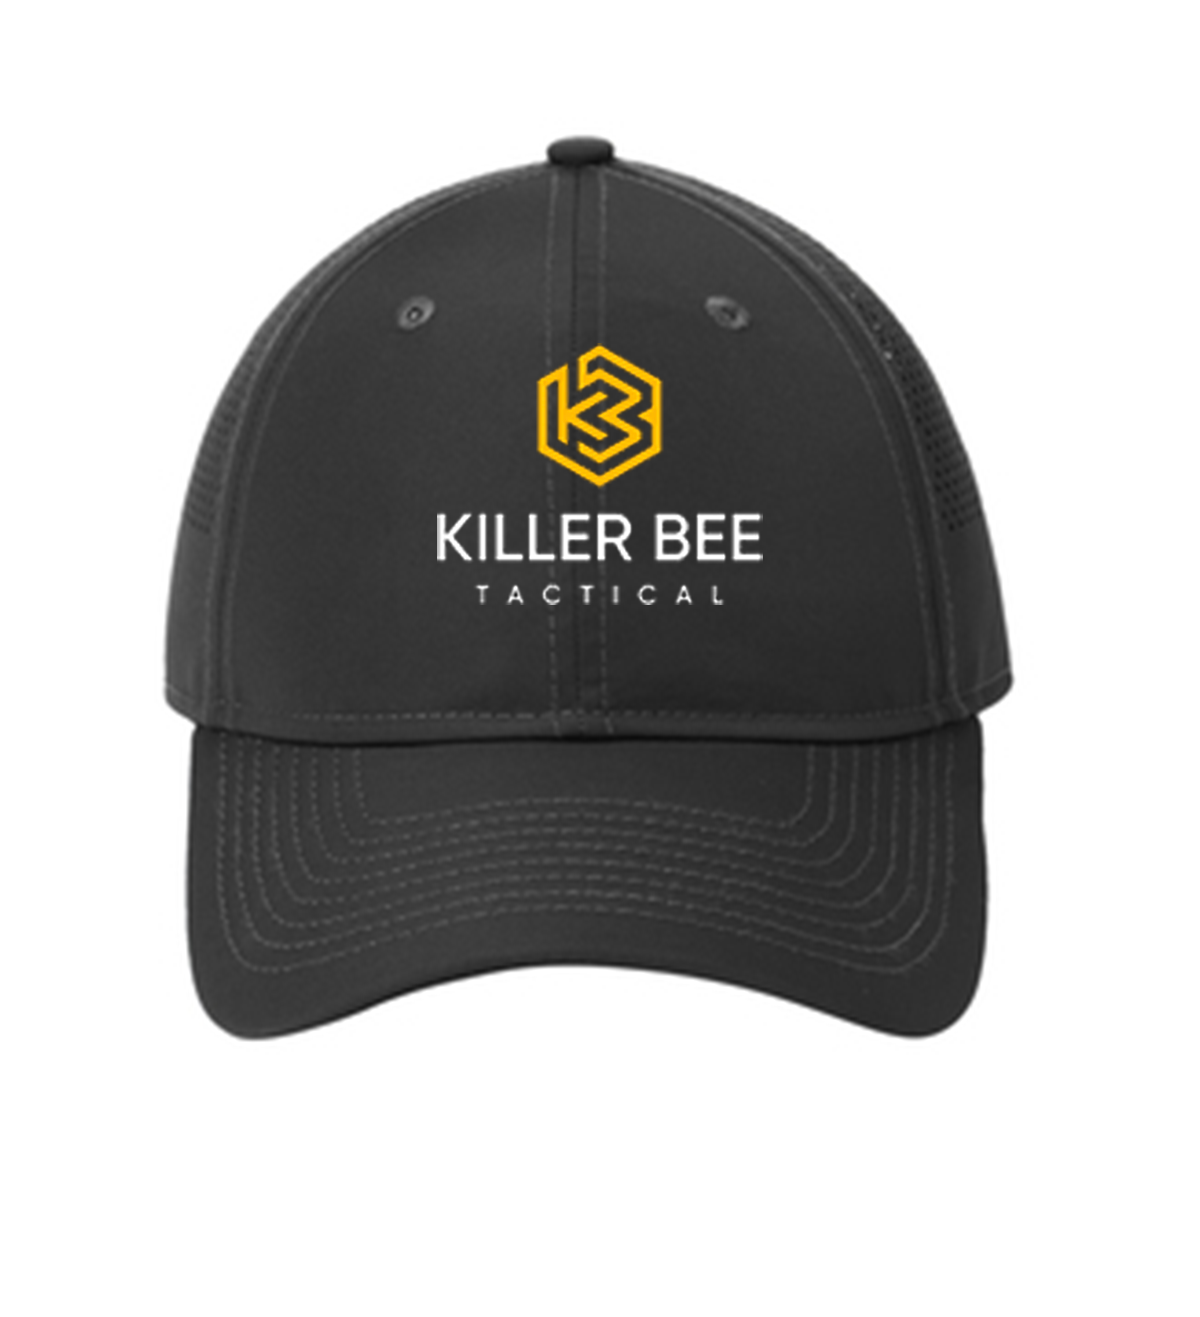 New Era Perforated Performance Cap, Black [Killer Bee]